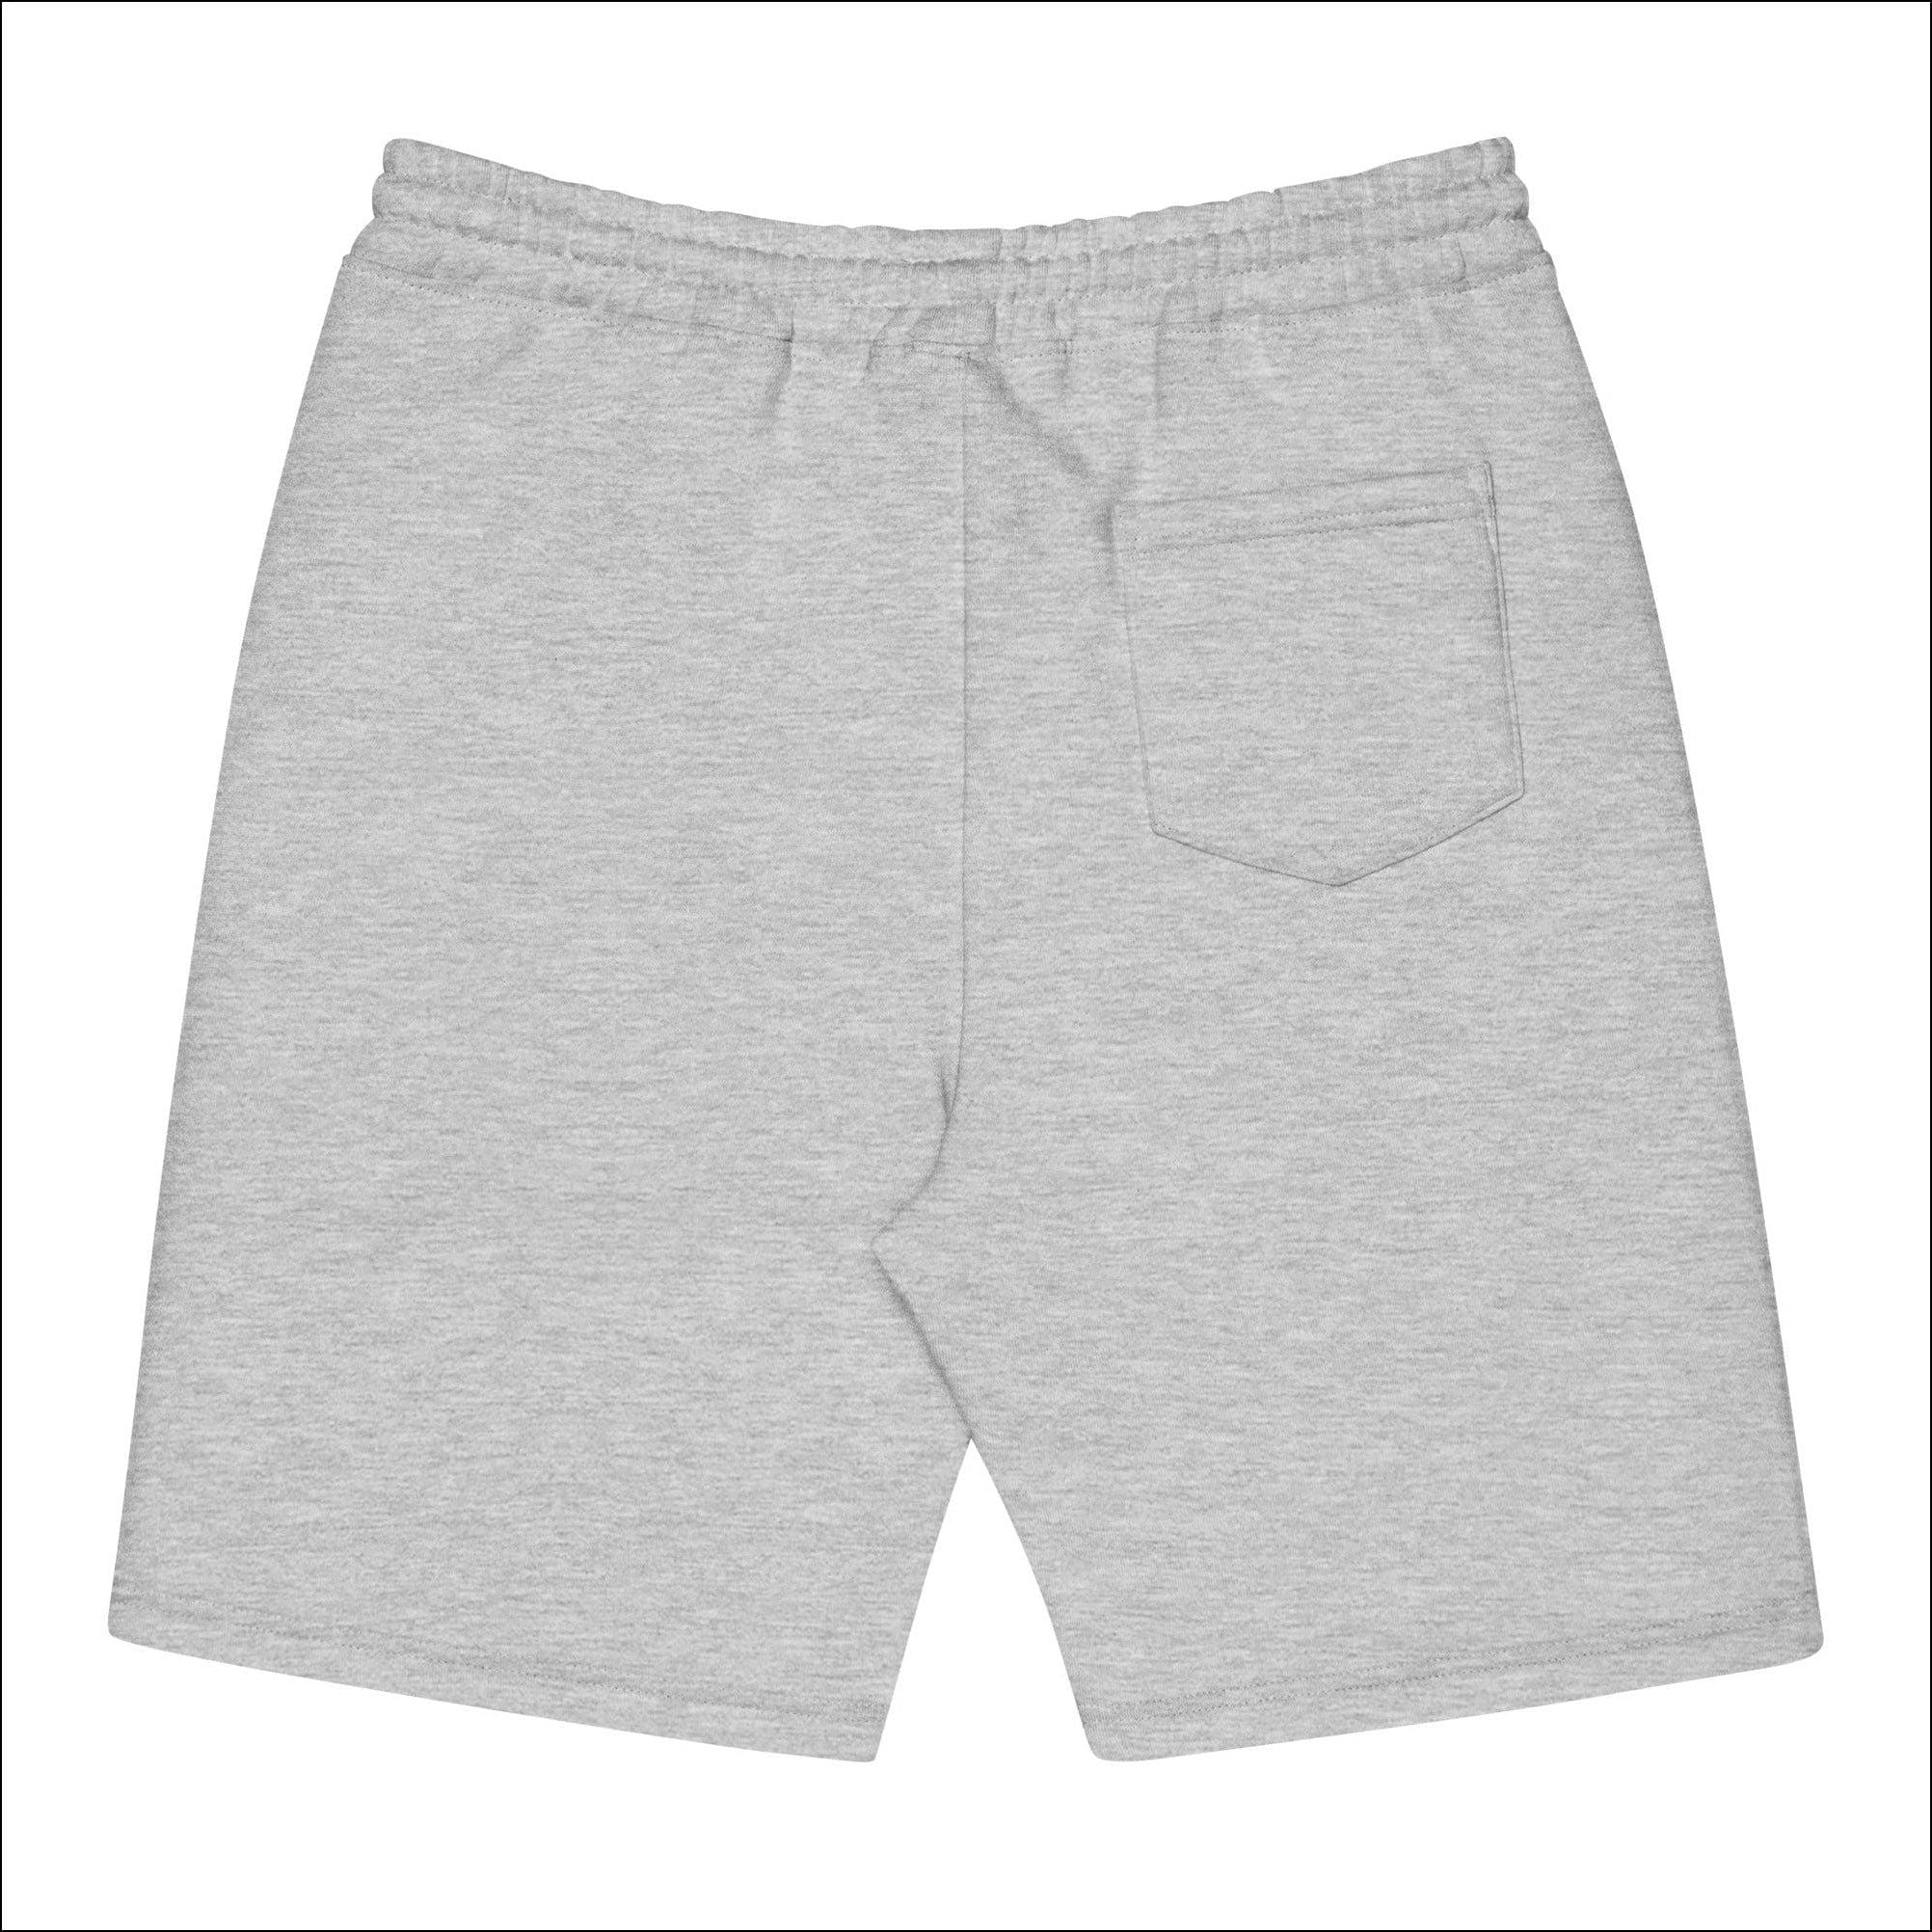 Bold Bad Shorts - Bad Product